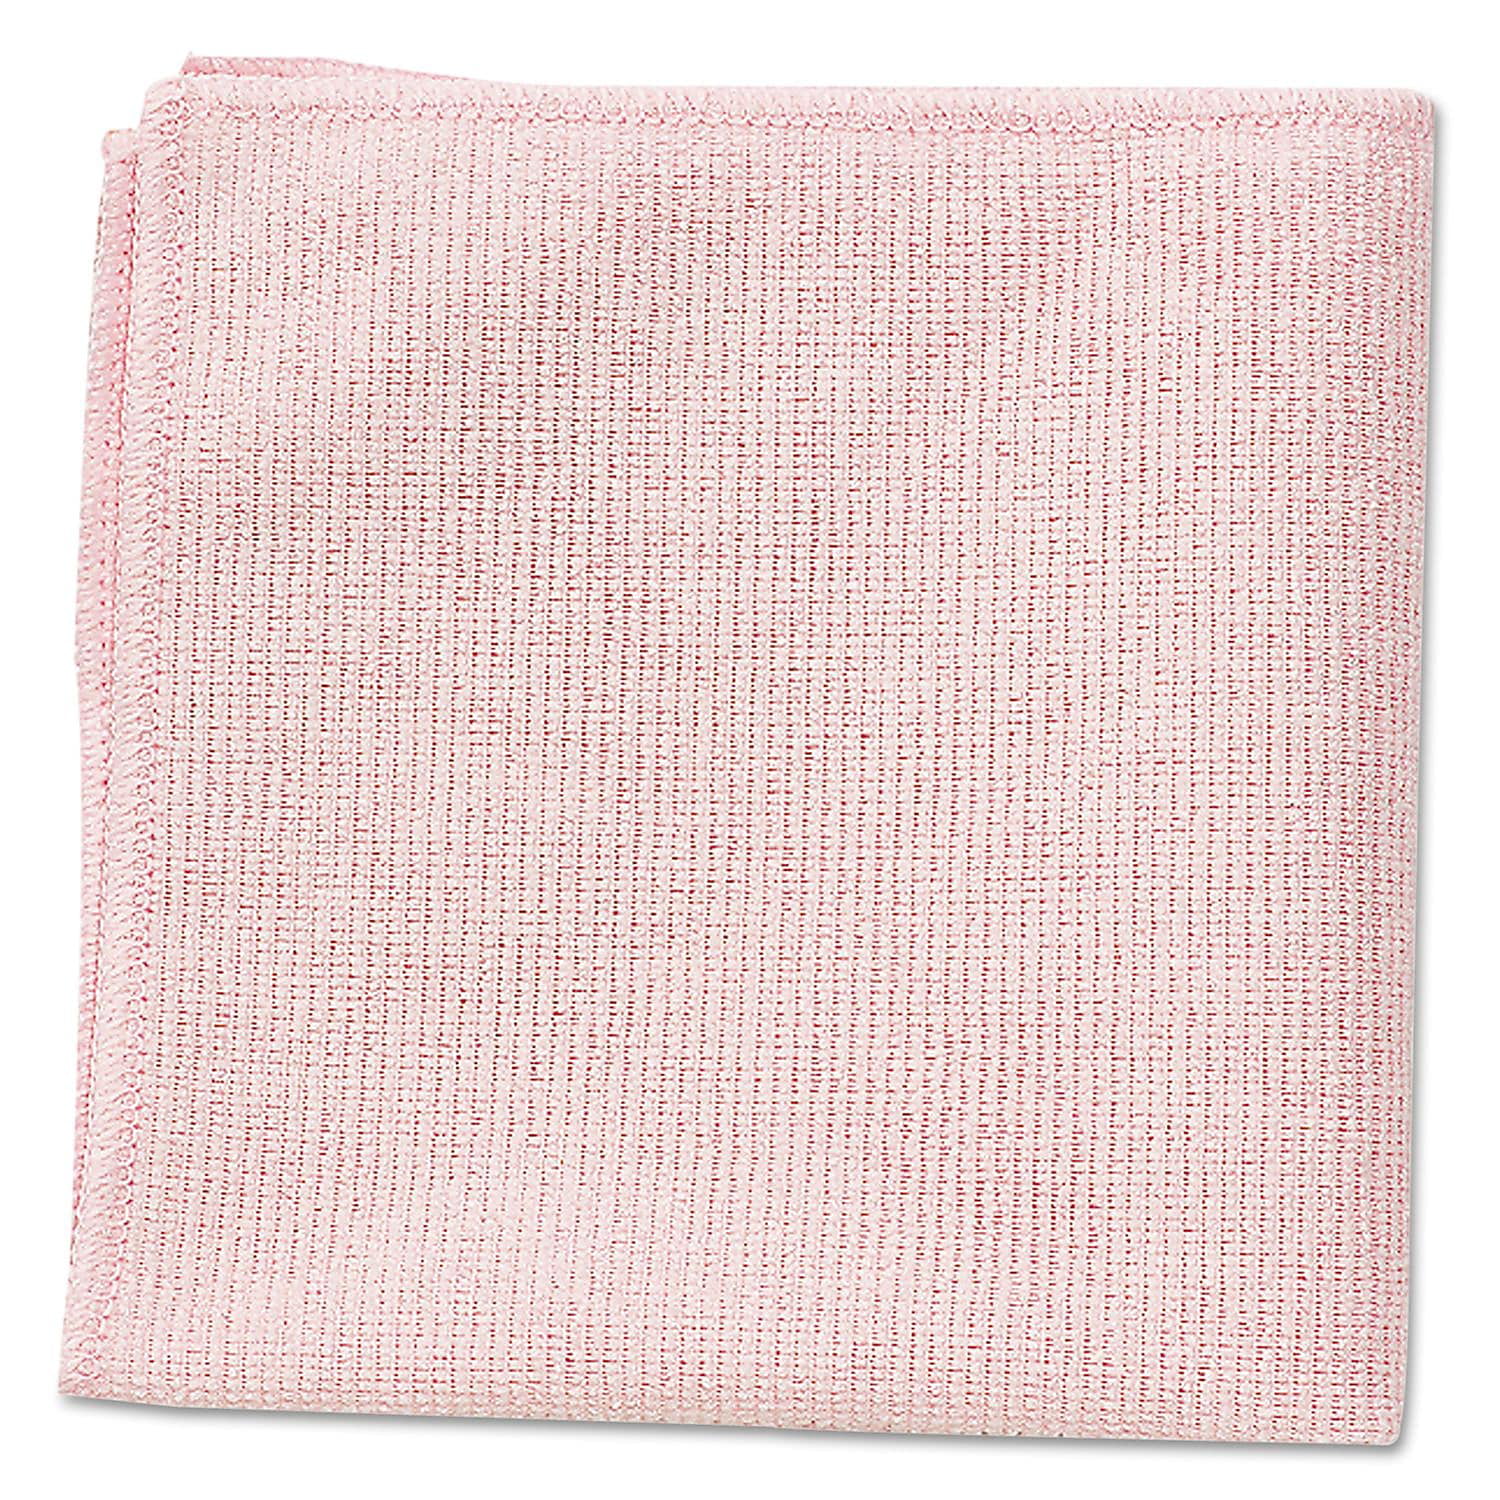 Rubbermaid Commercial 1820581 Microfiber Economy Cloth 16-inch by 16-inch Pink Rubbermaid Commercial Products 